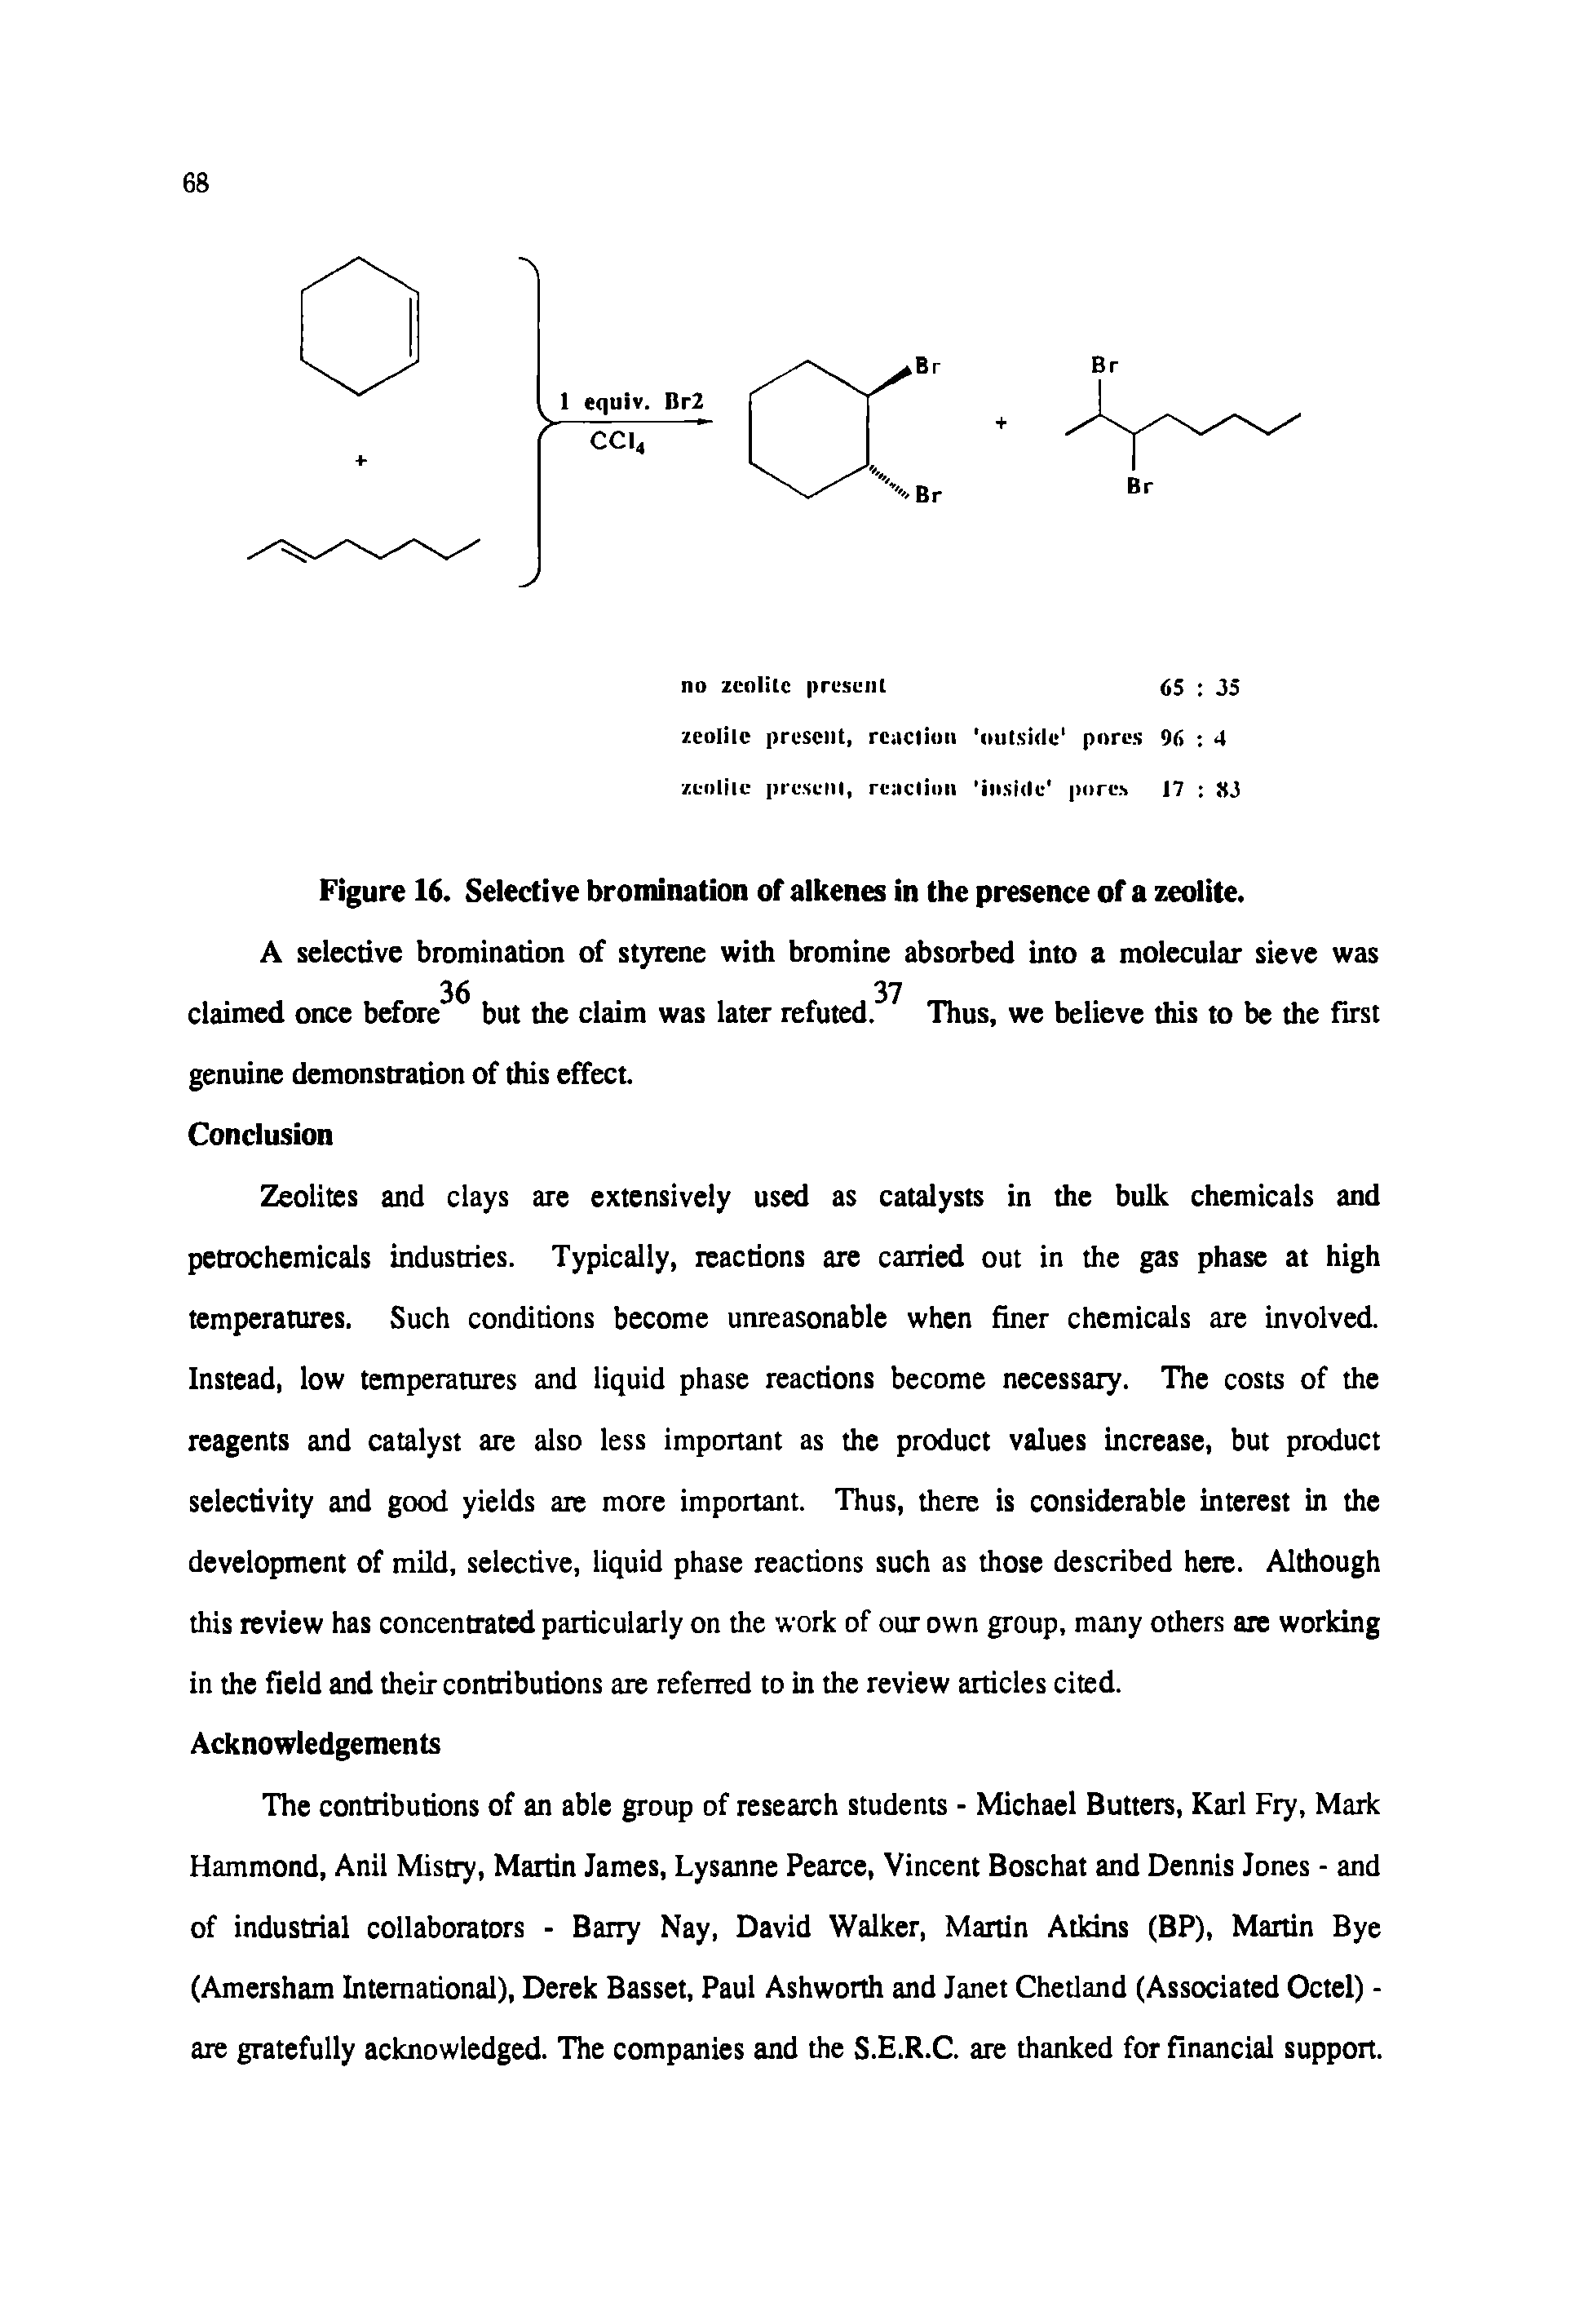 Figure 16. Selective bromination of alkenes in the presence of a zeolite.